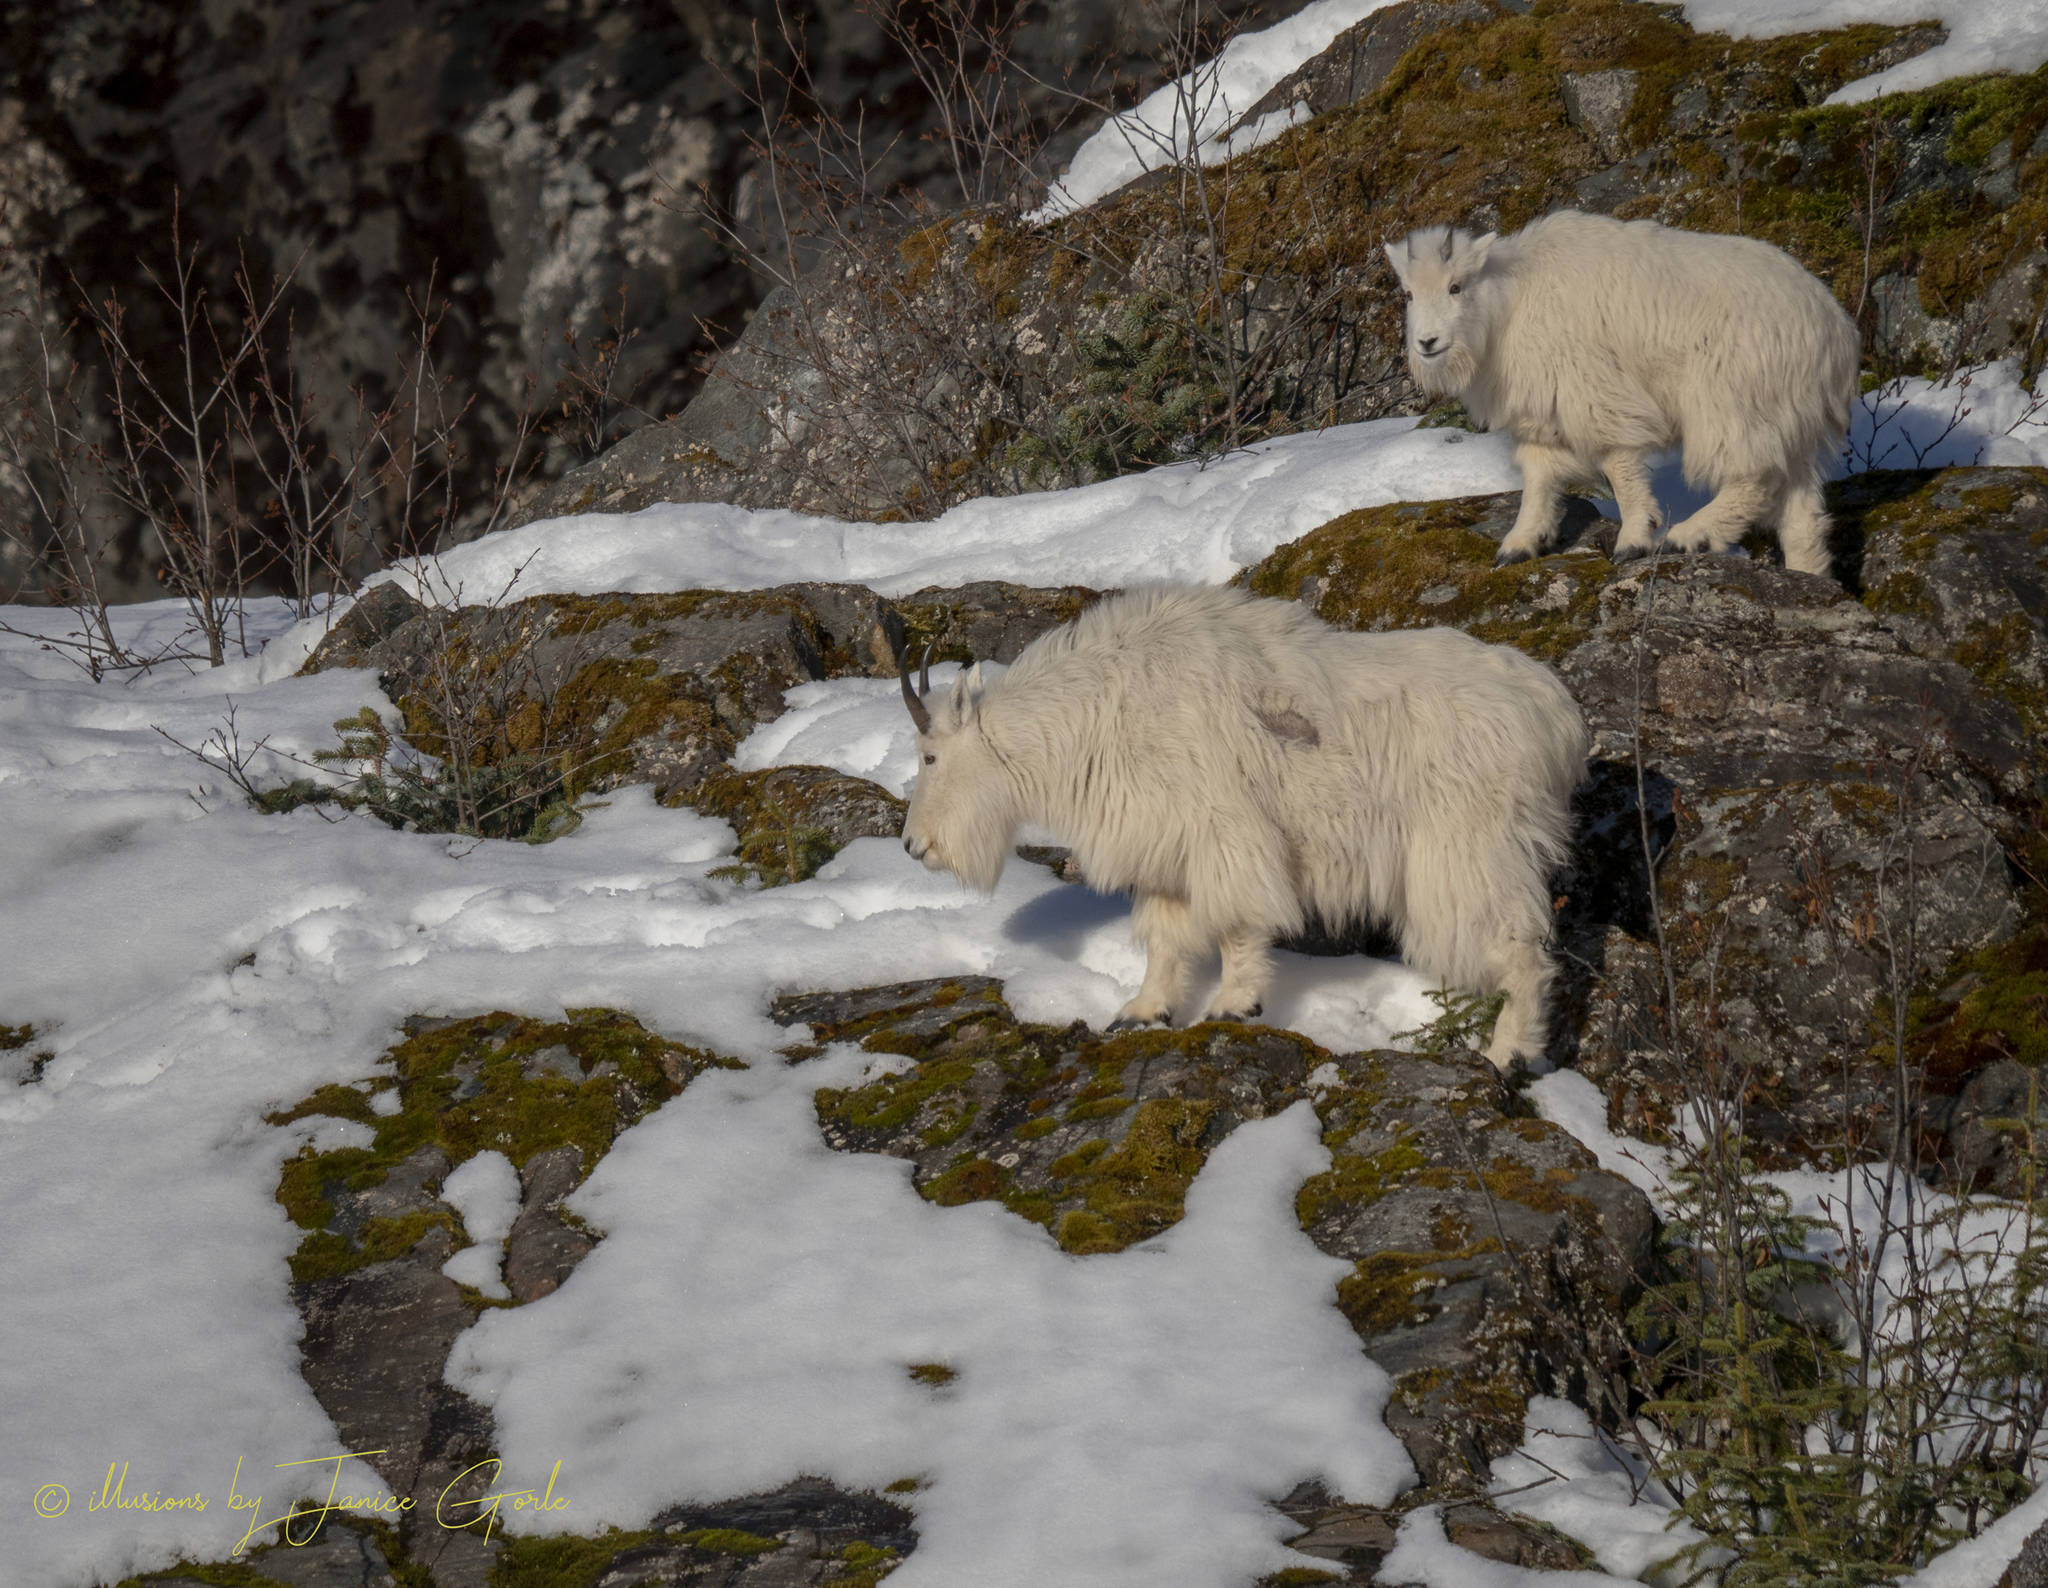 Mountain goats enjoy lichens. (Courtesy Photo | Janice Gorle)